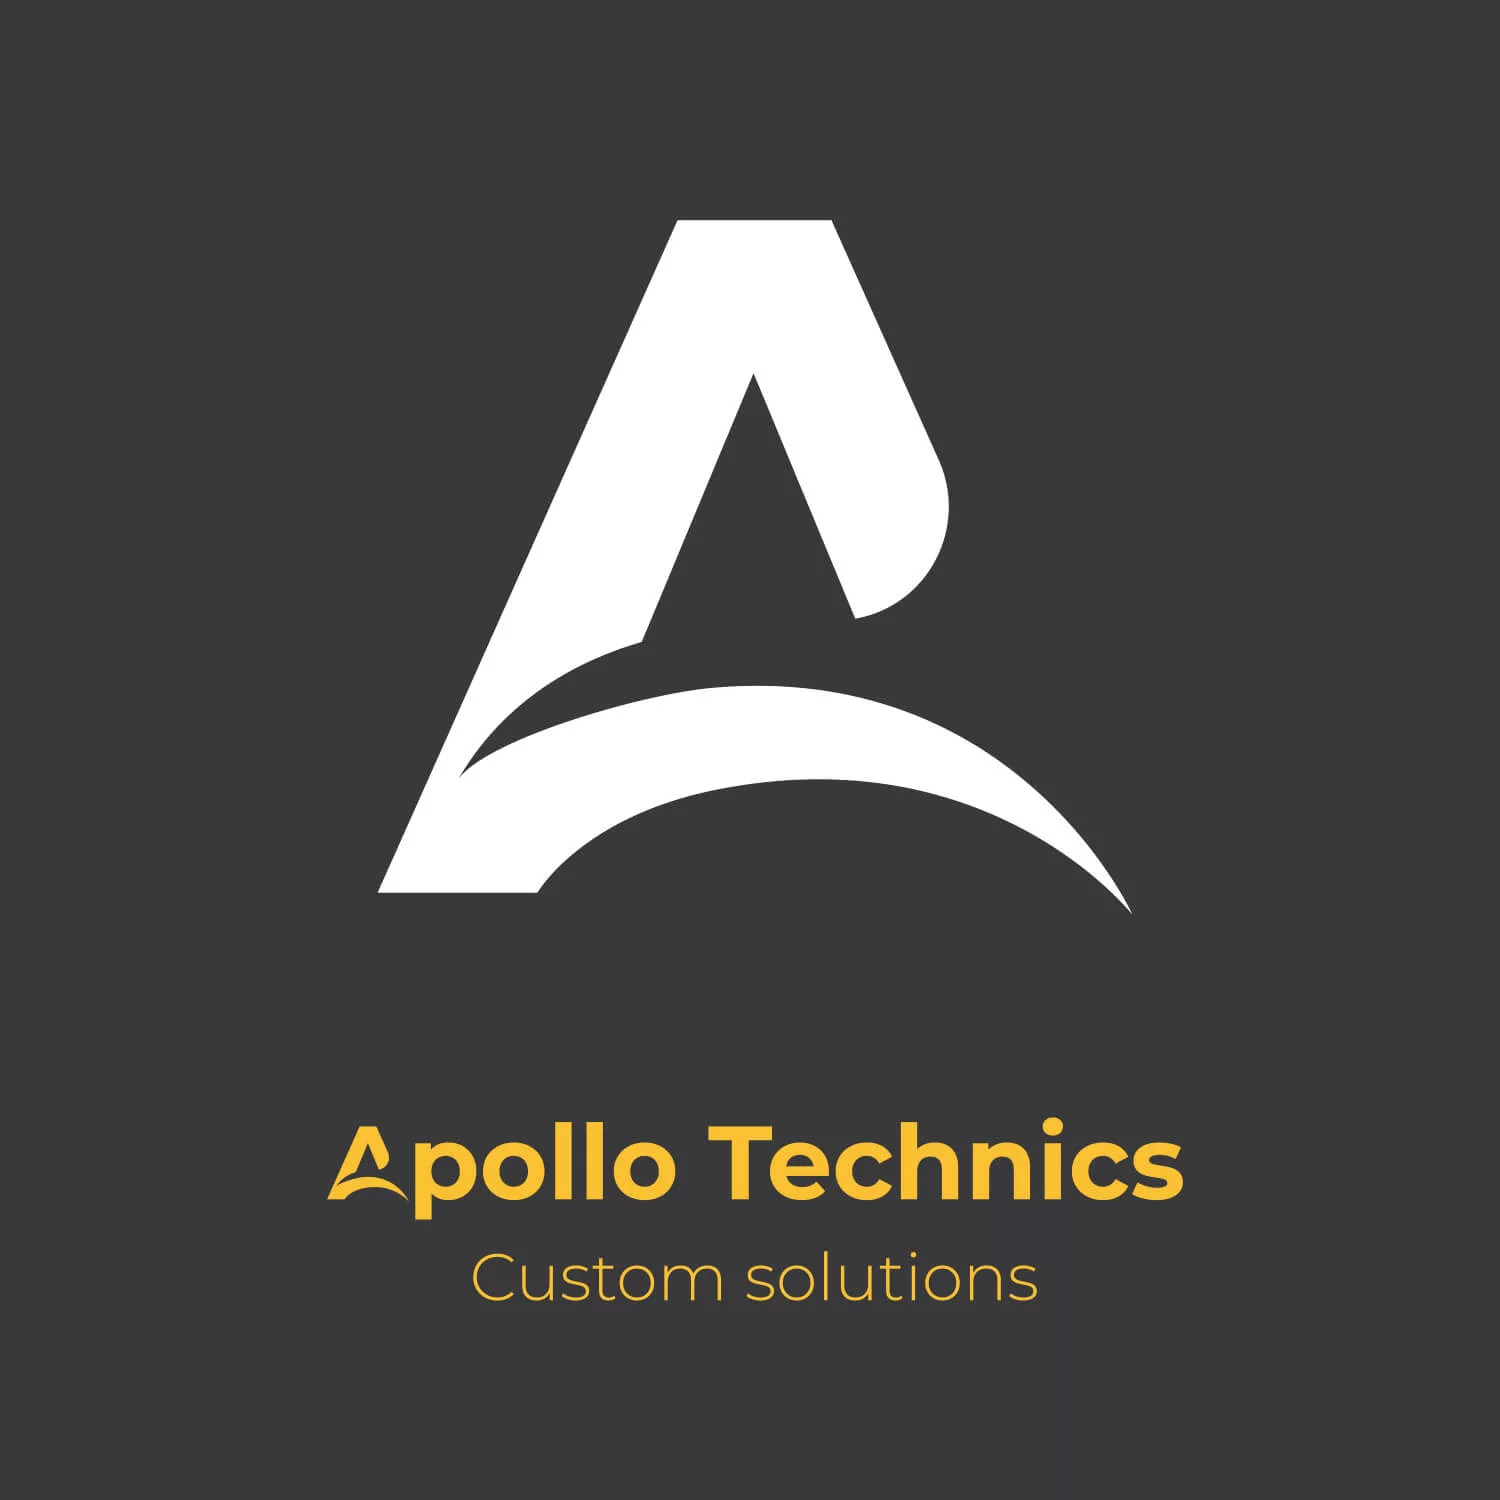 Portfolio sem-aha: Ontwerp logo Apollo Technics